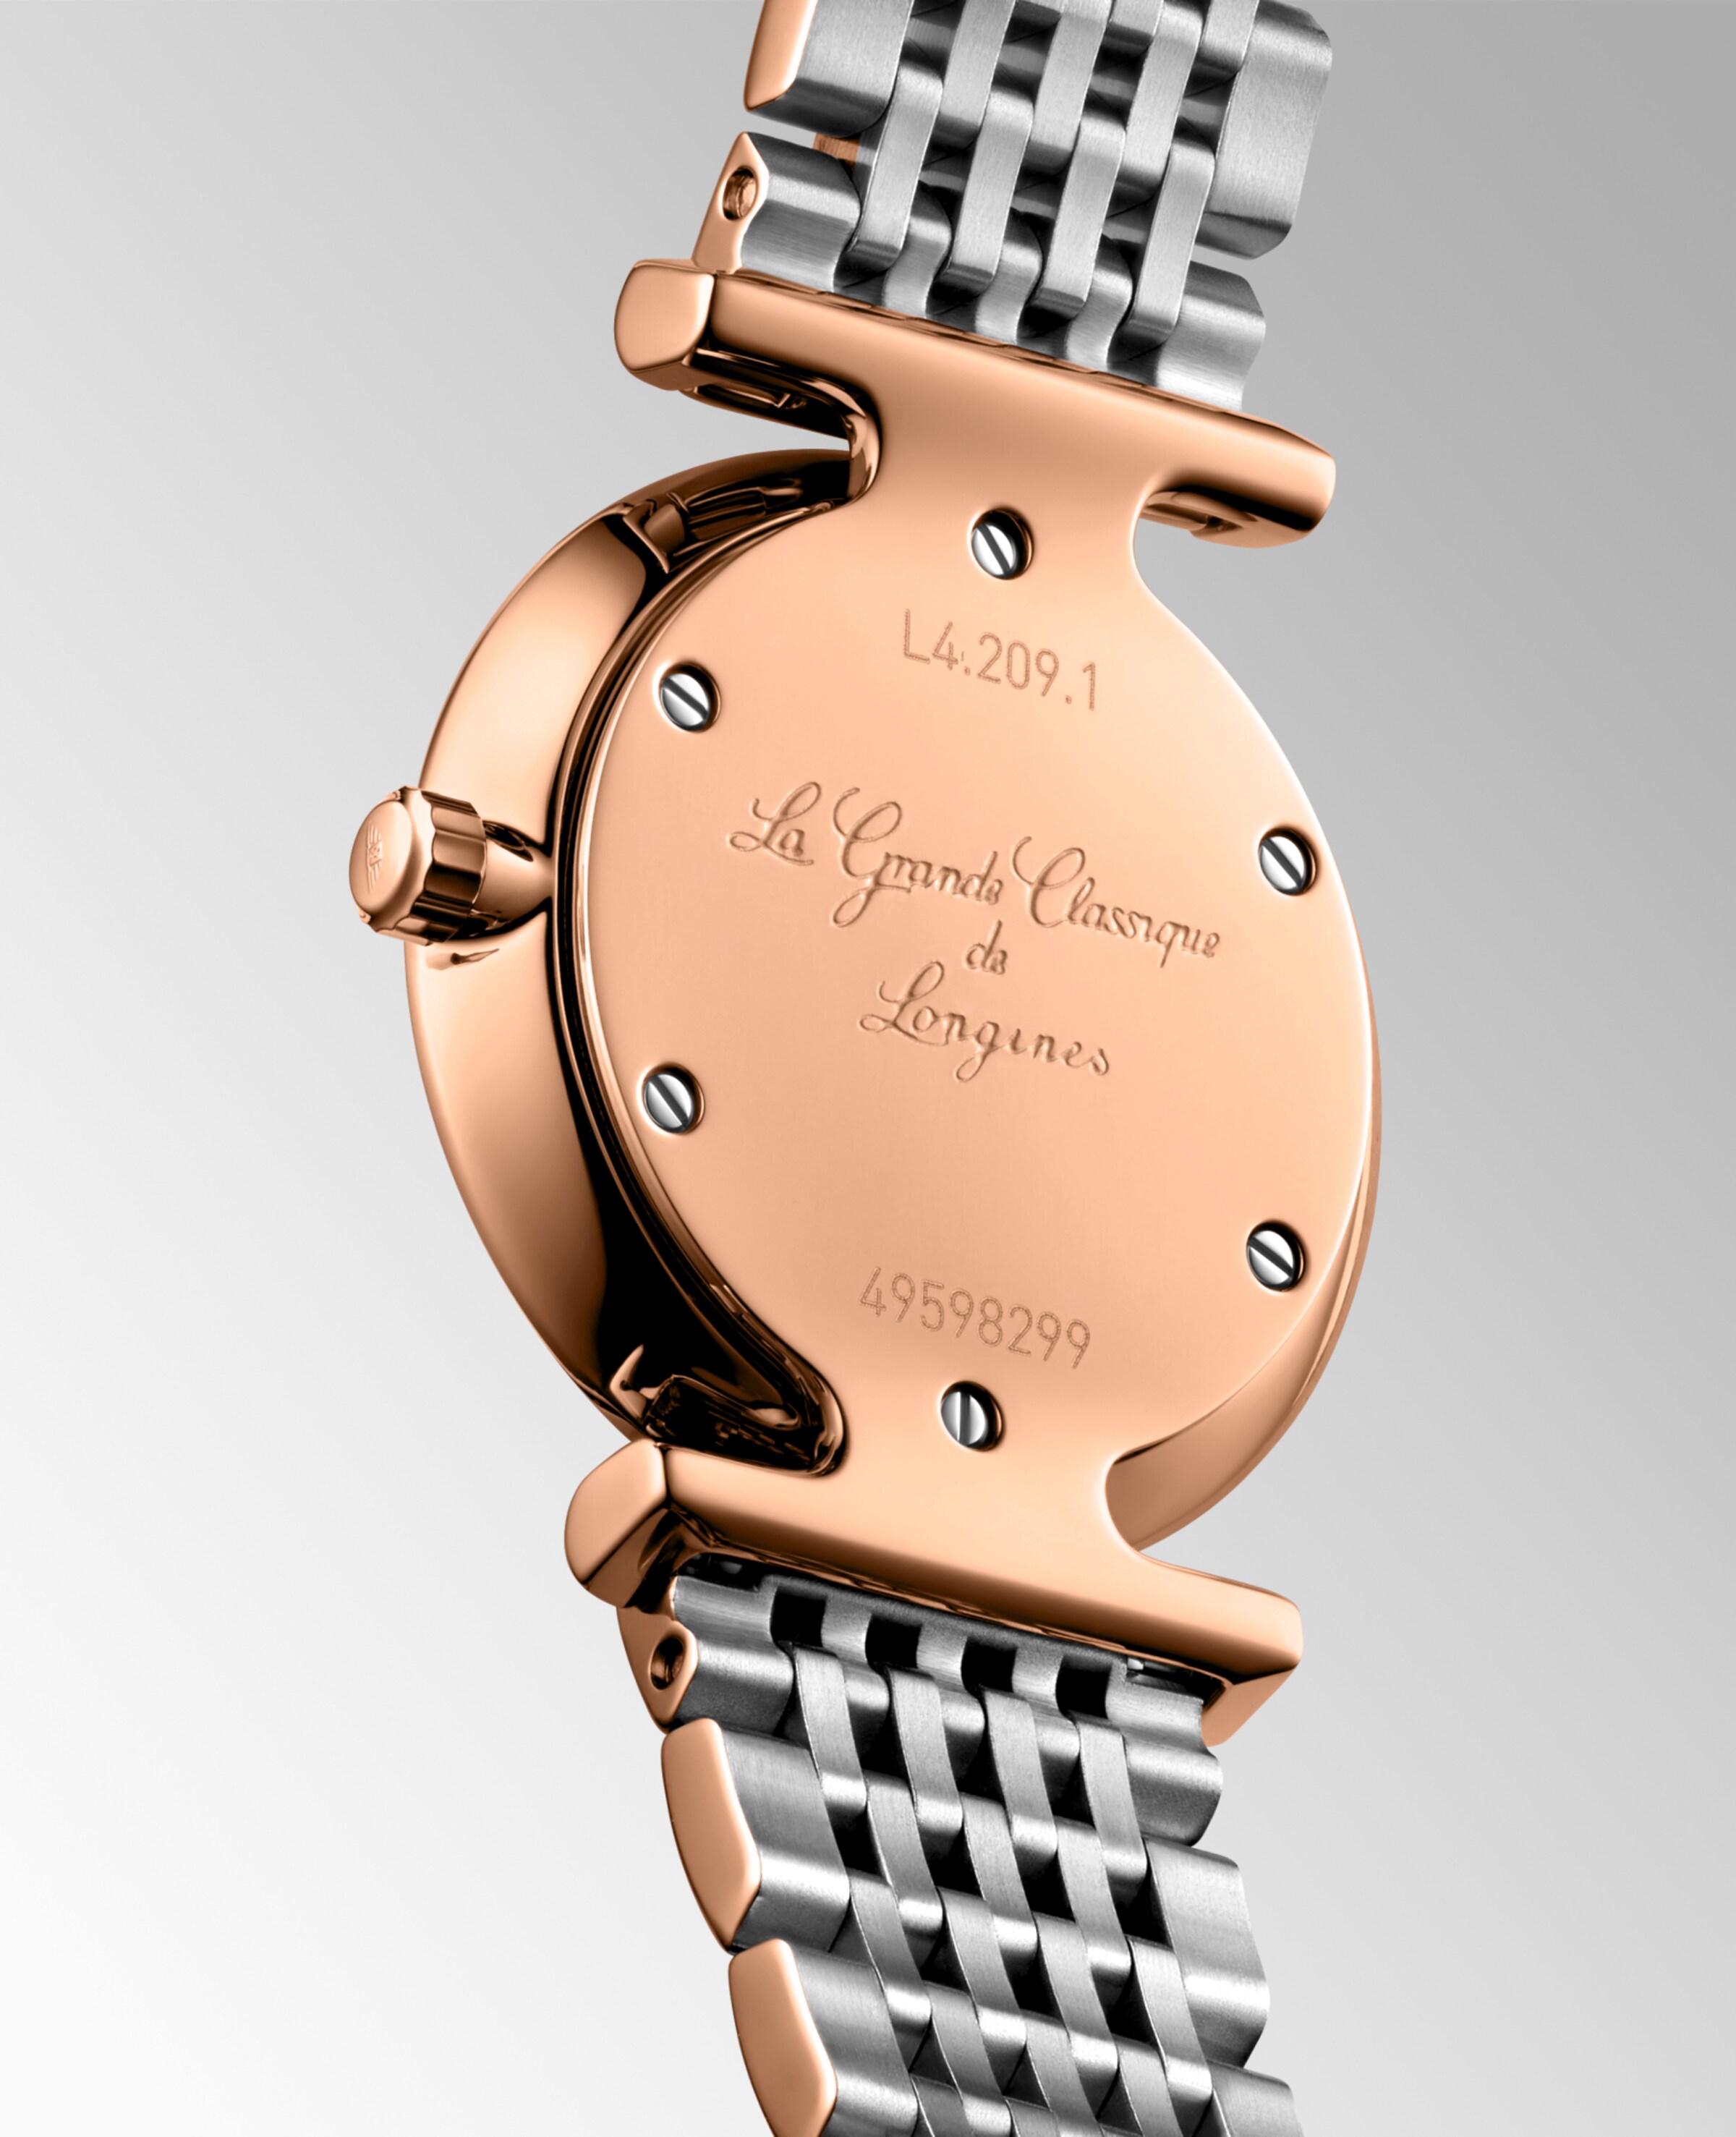 Longines LA GRANDE CLASSIQUE DE LONGINES Quartz Red PVD coating Watch - L4.209.1.97.7